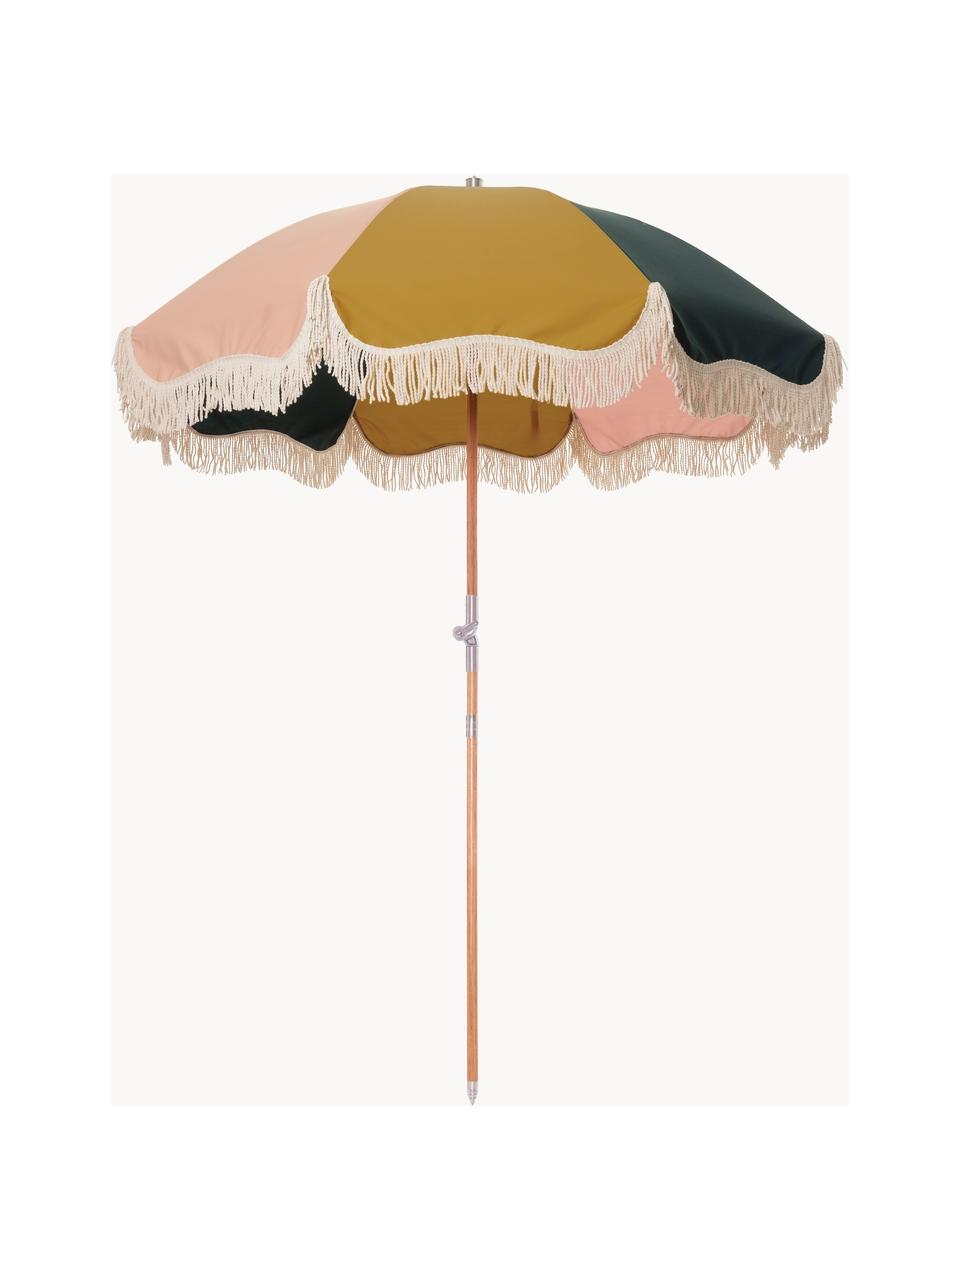 Parasol Retro met franjes, knikbaar, Frame: gelamineerd hout, Franjes: katoen, Oker, lichtroze, zwart, crèmewit, Ø 180 x H 230 cm